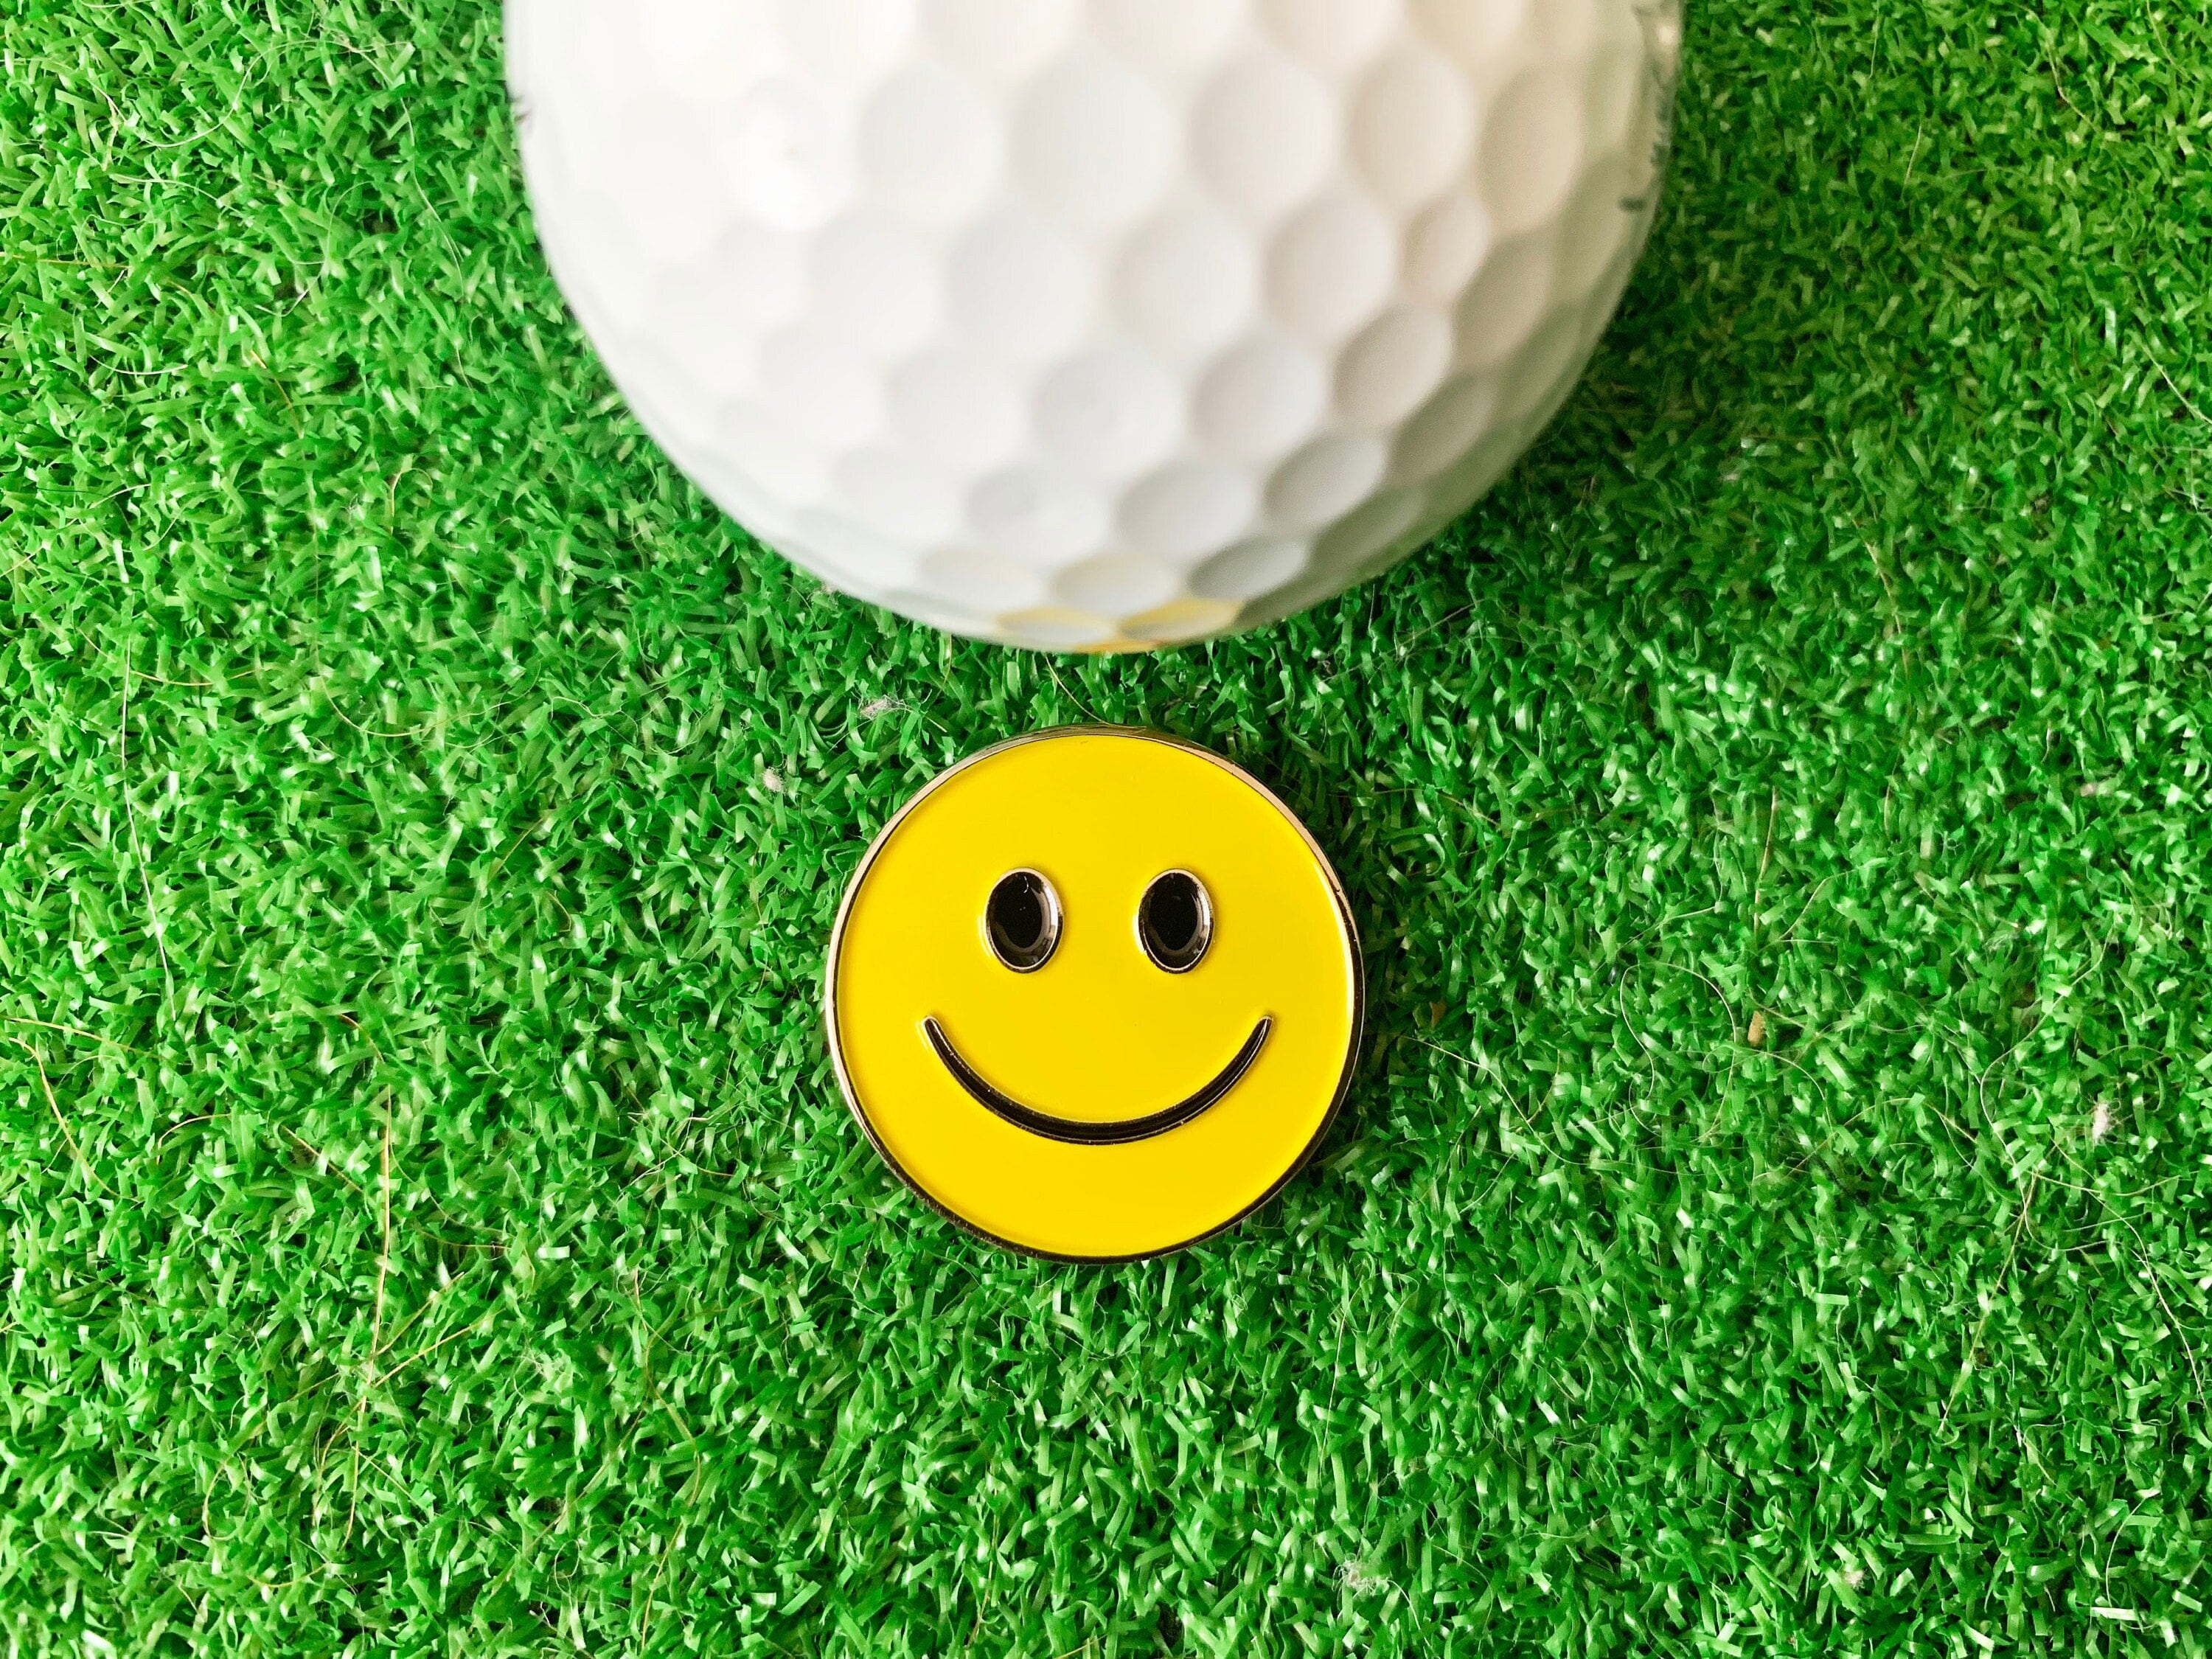 Oji-Emoji Premium Emoji Golf Balls, Unique Professional Practice